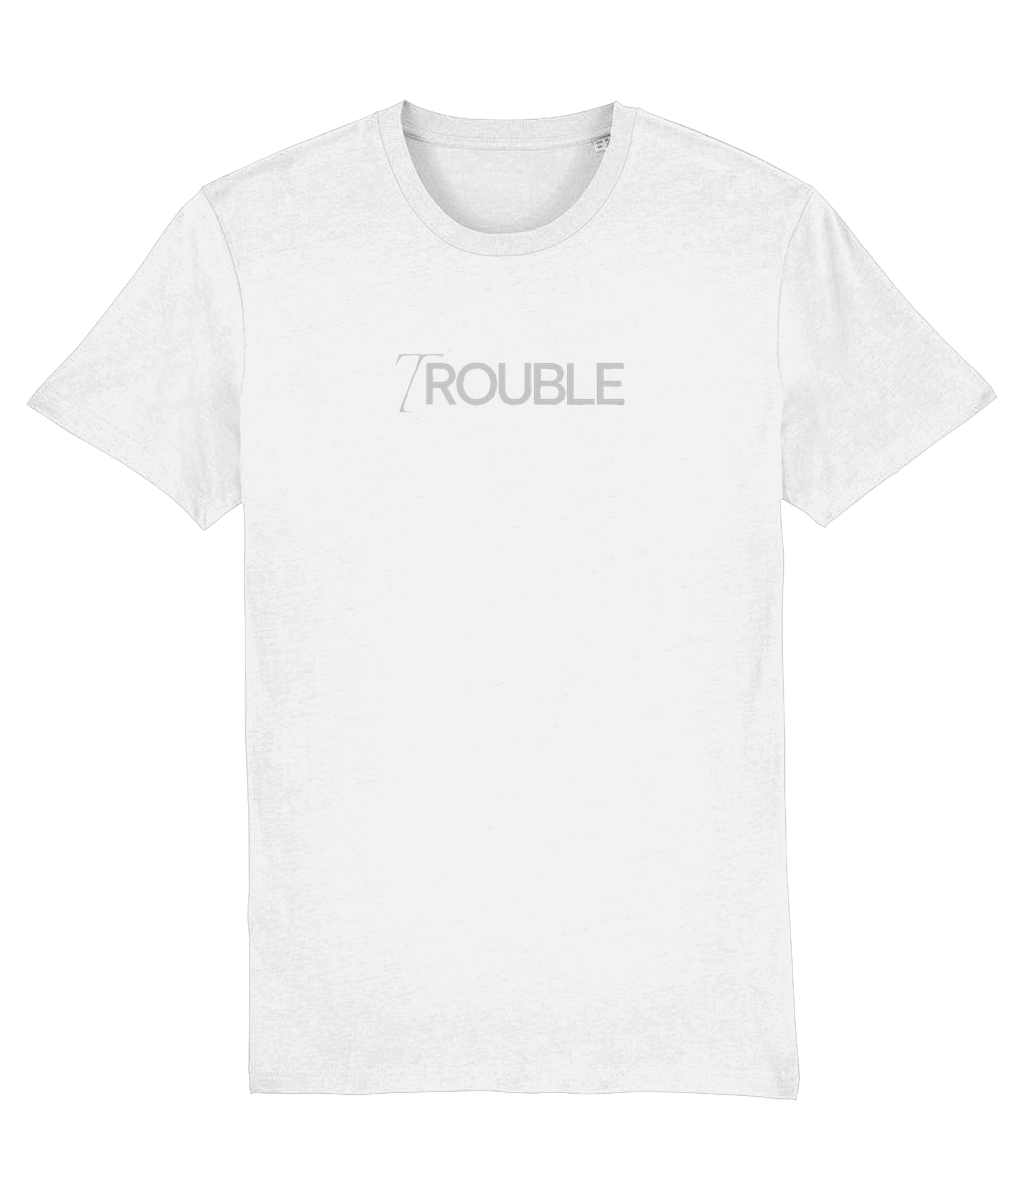 Trouble Organic Cotton T-shirt